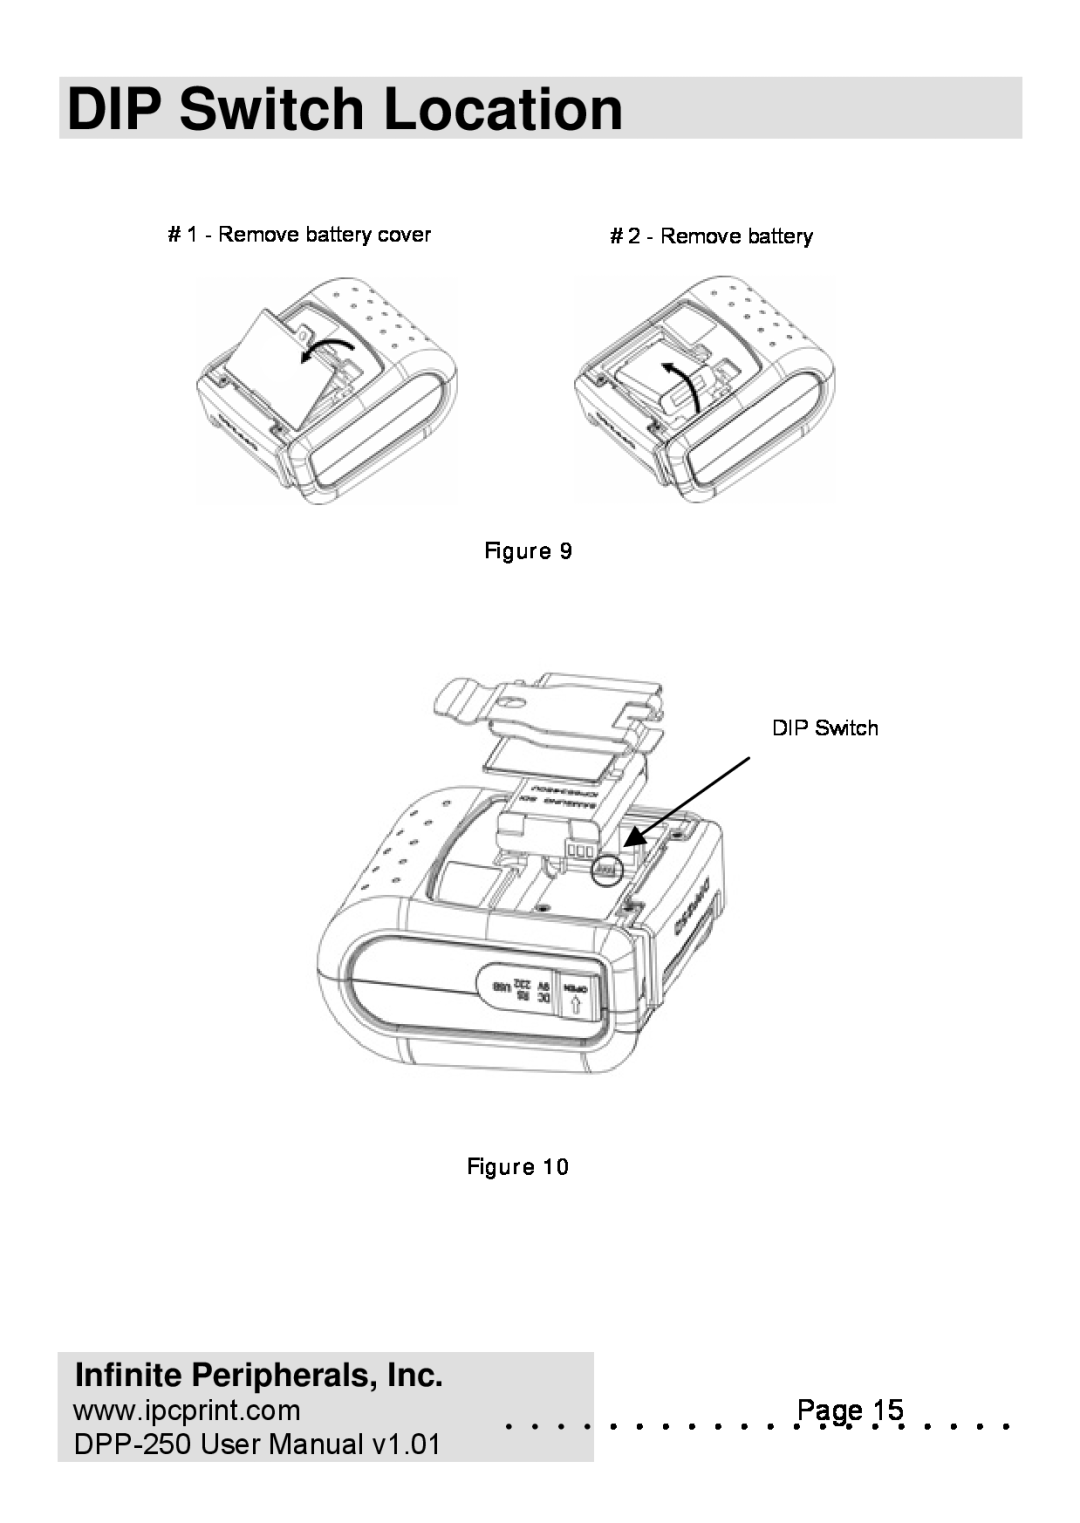 Infinite Peripherals DIP Switch Location, Infinite Peripherals, Inc, DPP-250 User Manual, # 1 - Remove battery cover 